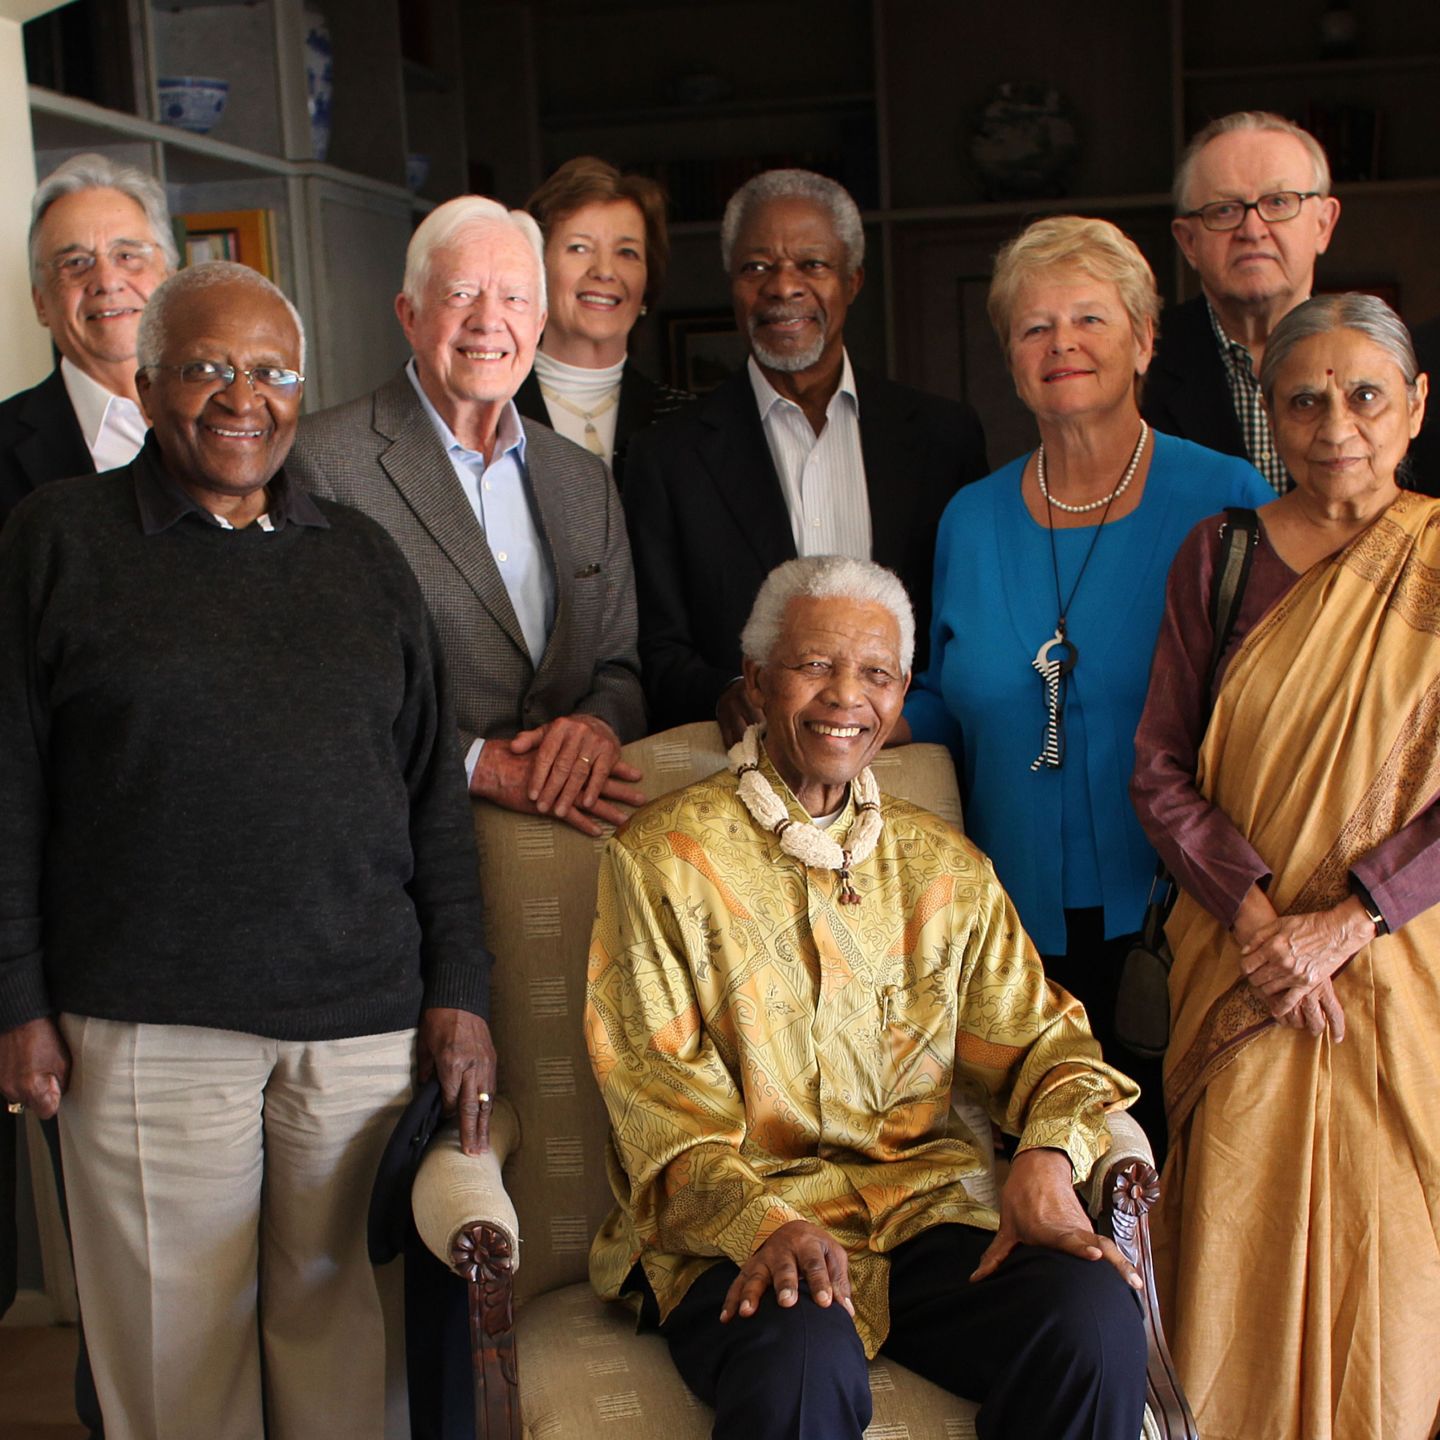 The Elders stand around a sitting Nelson Mandela